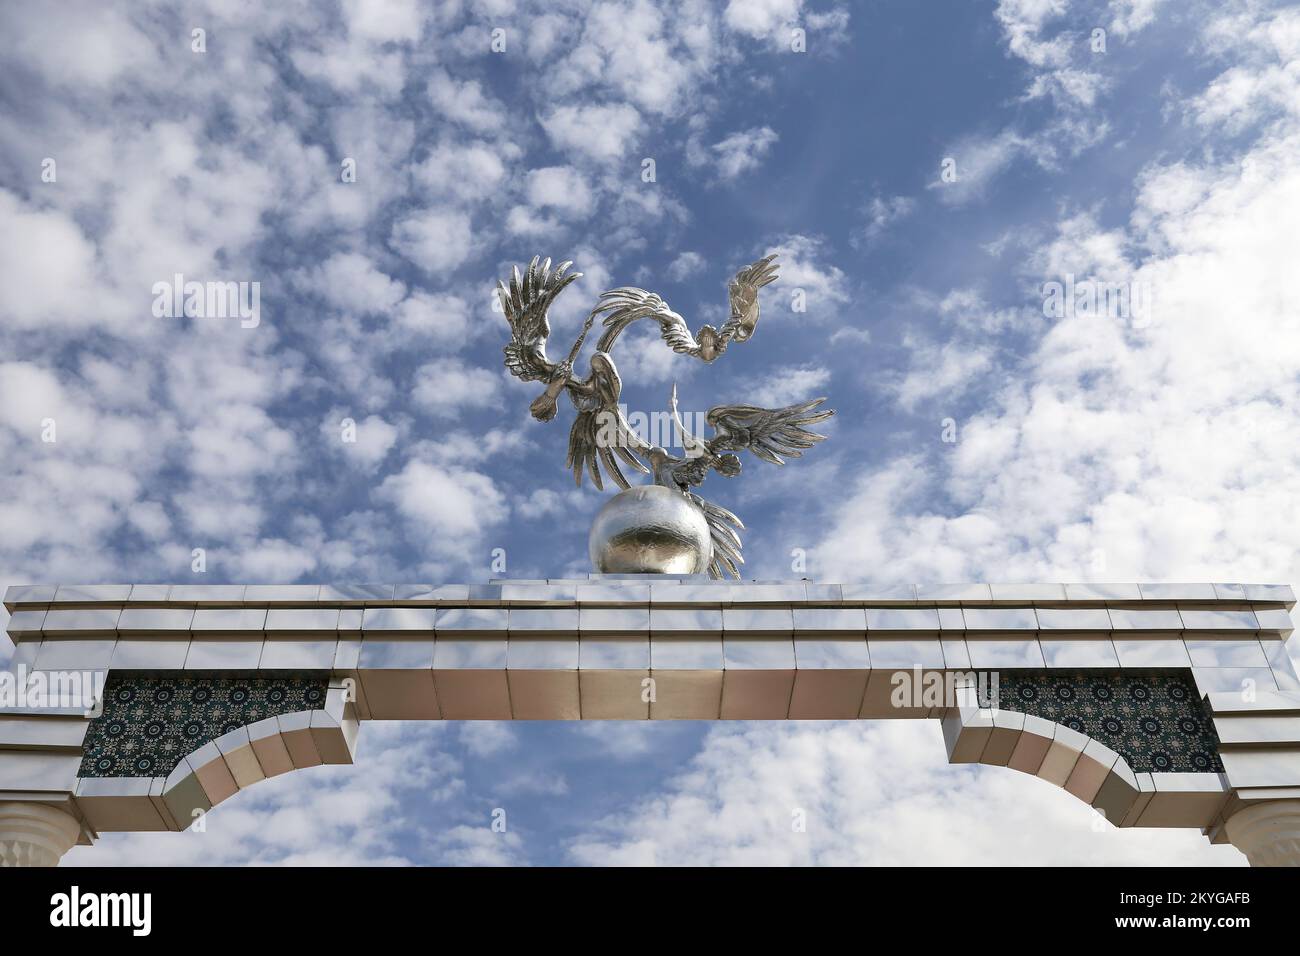 Storks symbolising peace and quietness, Mustakillik Maydoni (Independence Square), Central Tashkent, Tashkent Province, Uzbekistan, Central Asia Stock Photo